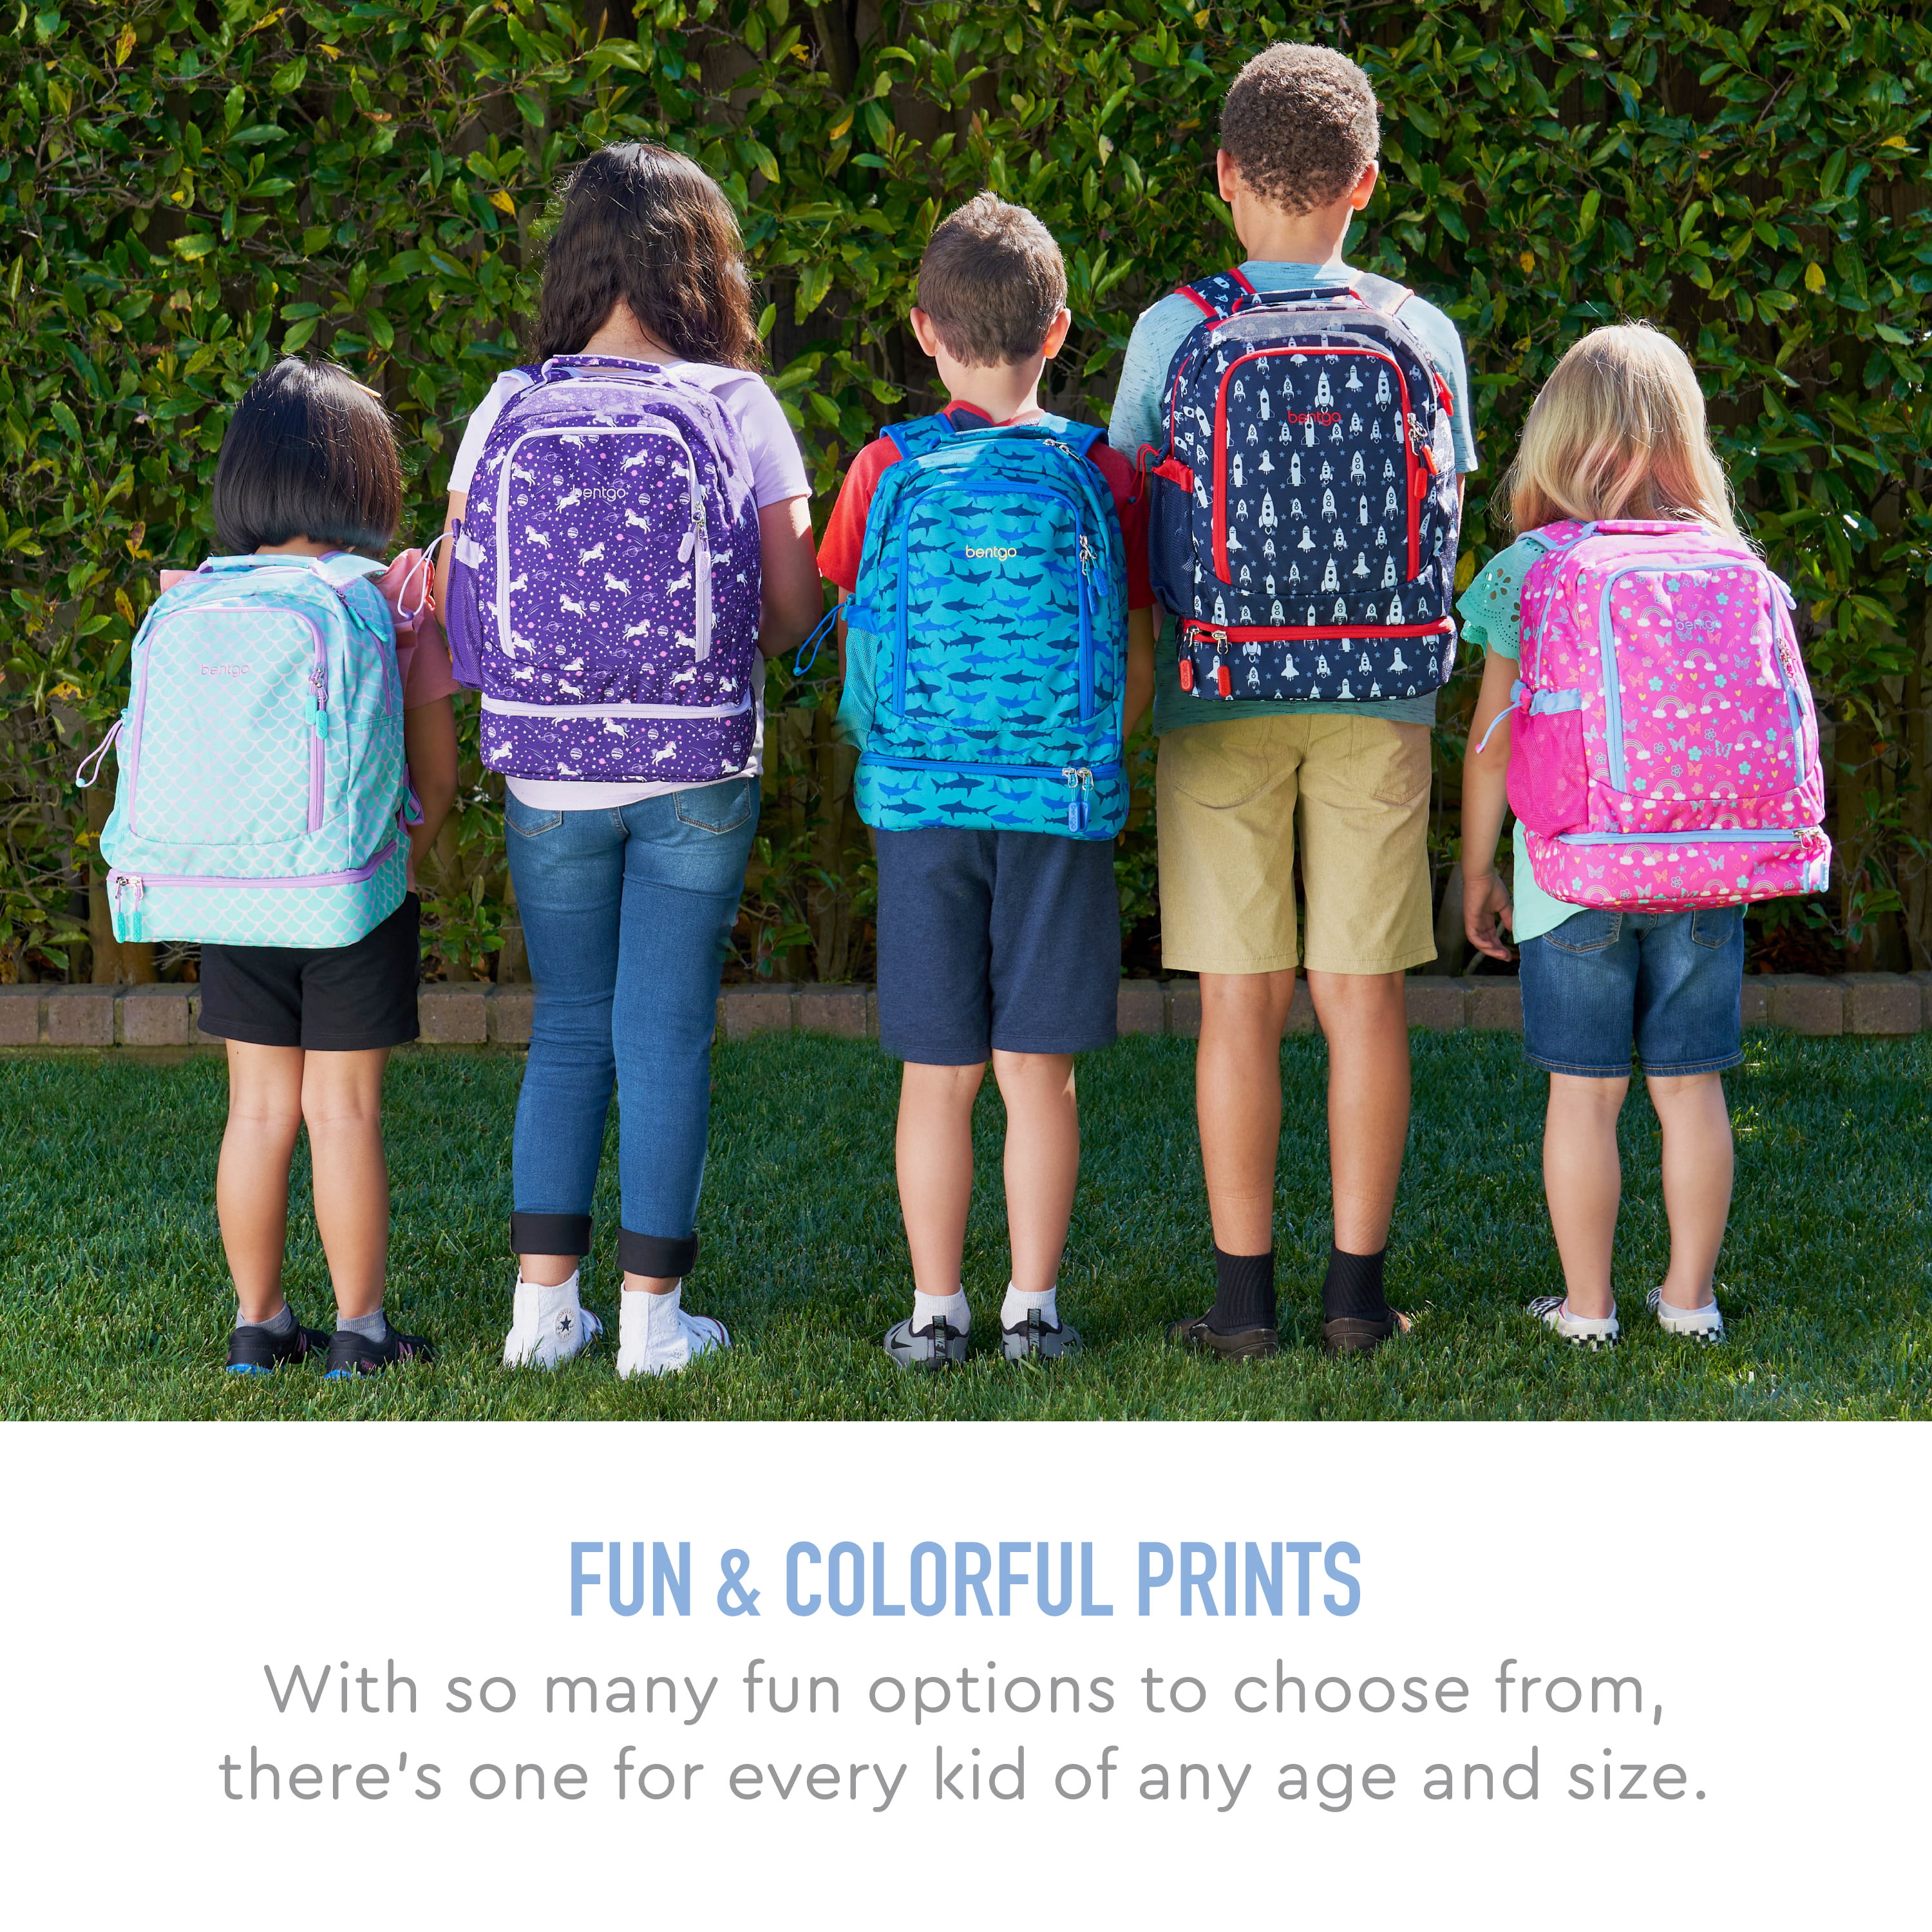 Bentgo - Kids Colour Lunchbox Purple + Kids Prints Backpack Lavander Galaxy